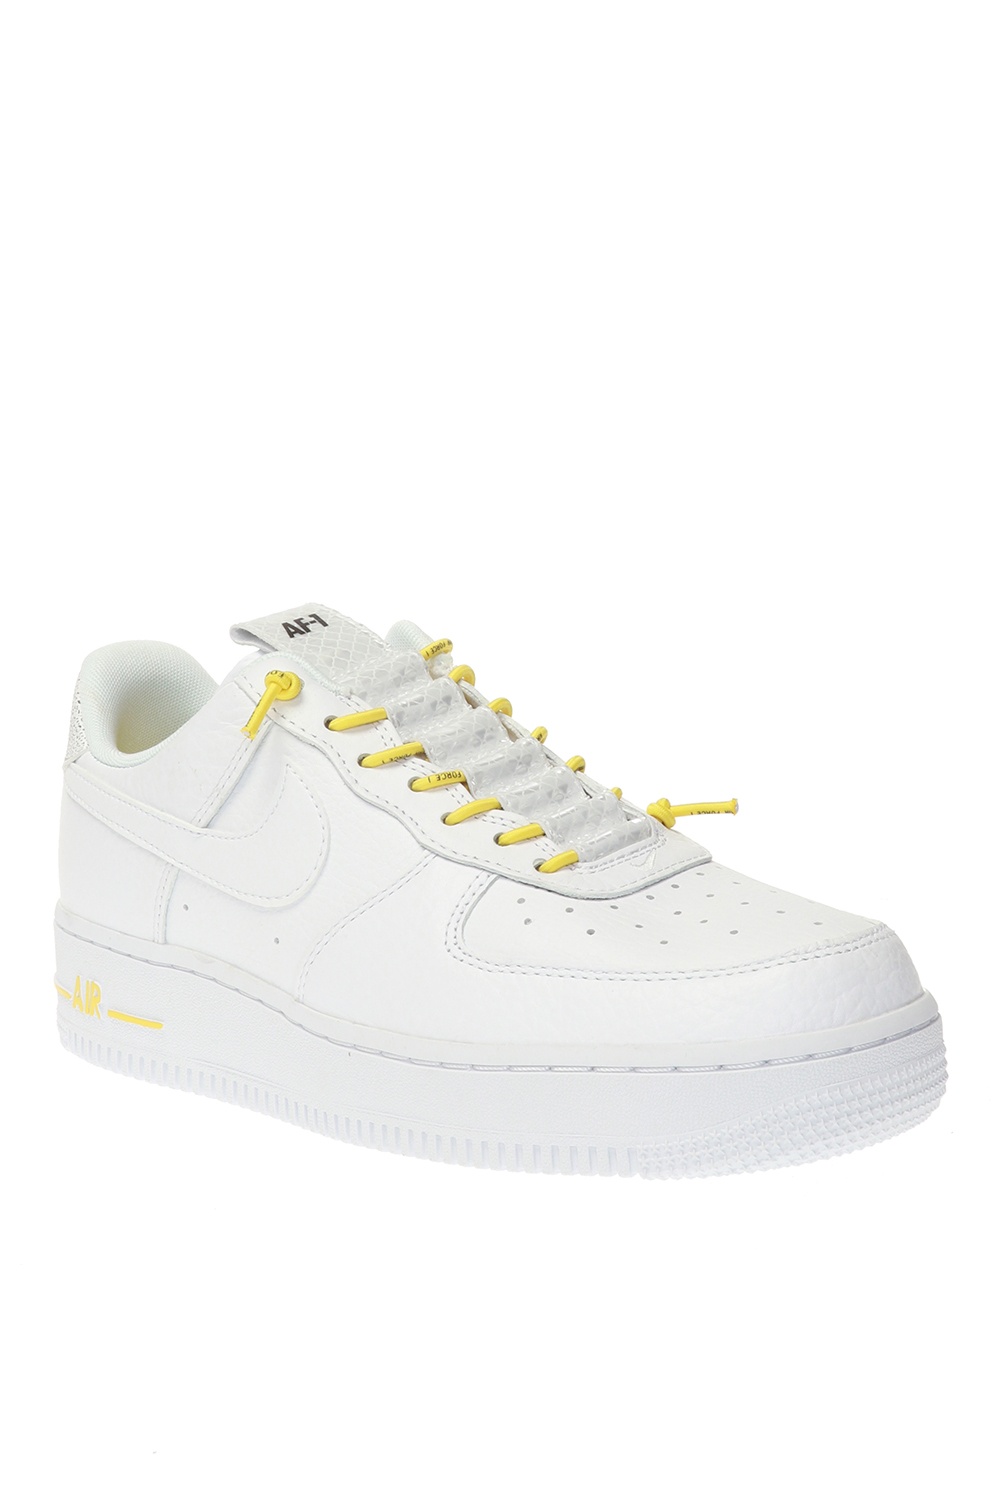 nike air force 1 07 white yellow